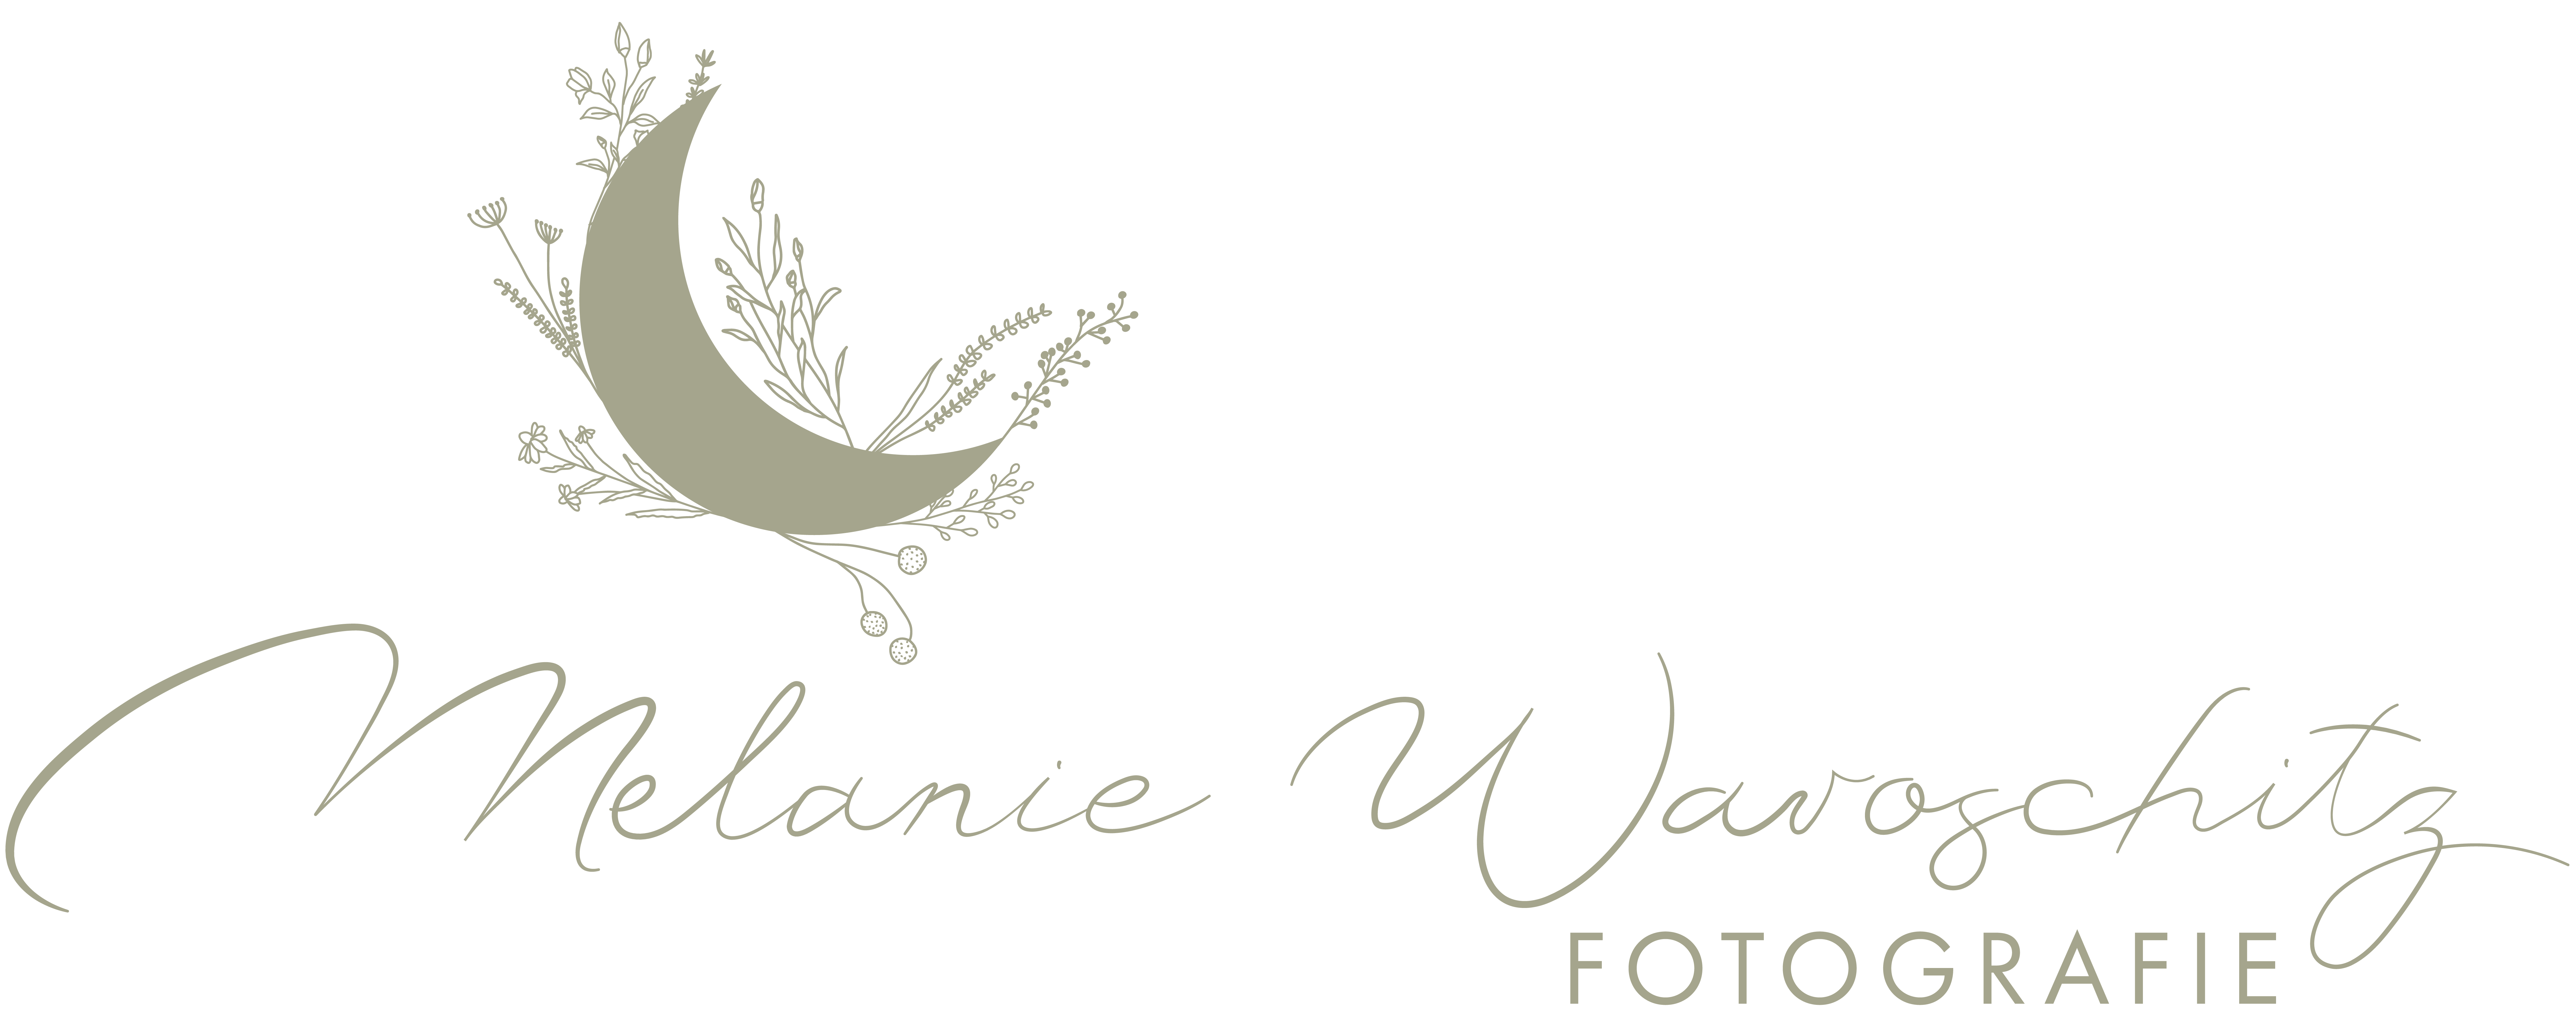 Melanie Waroschitz Fotografie Logo